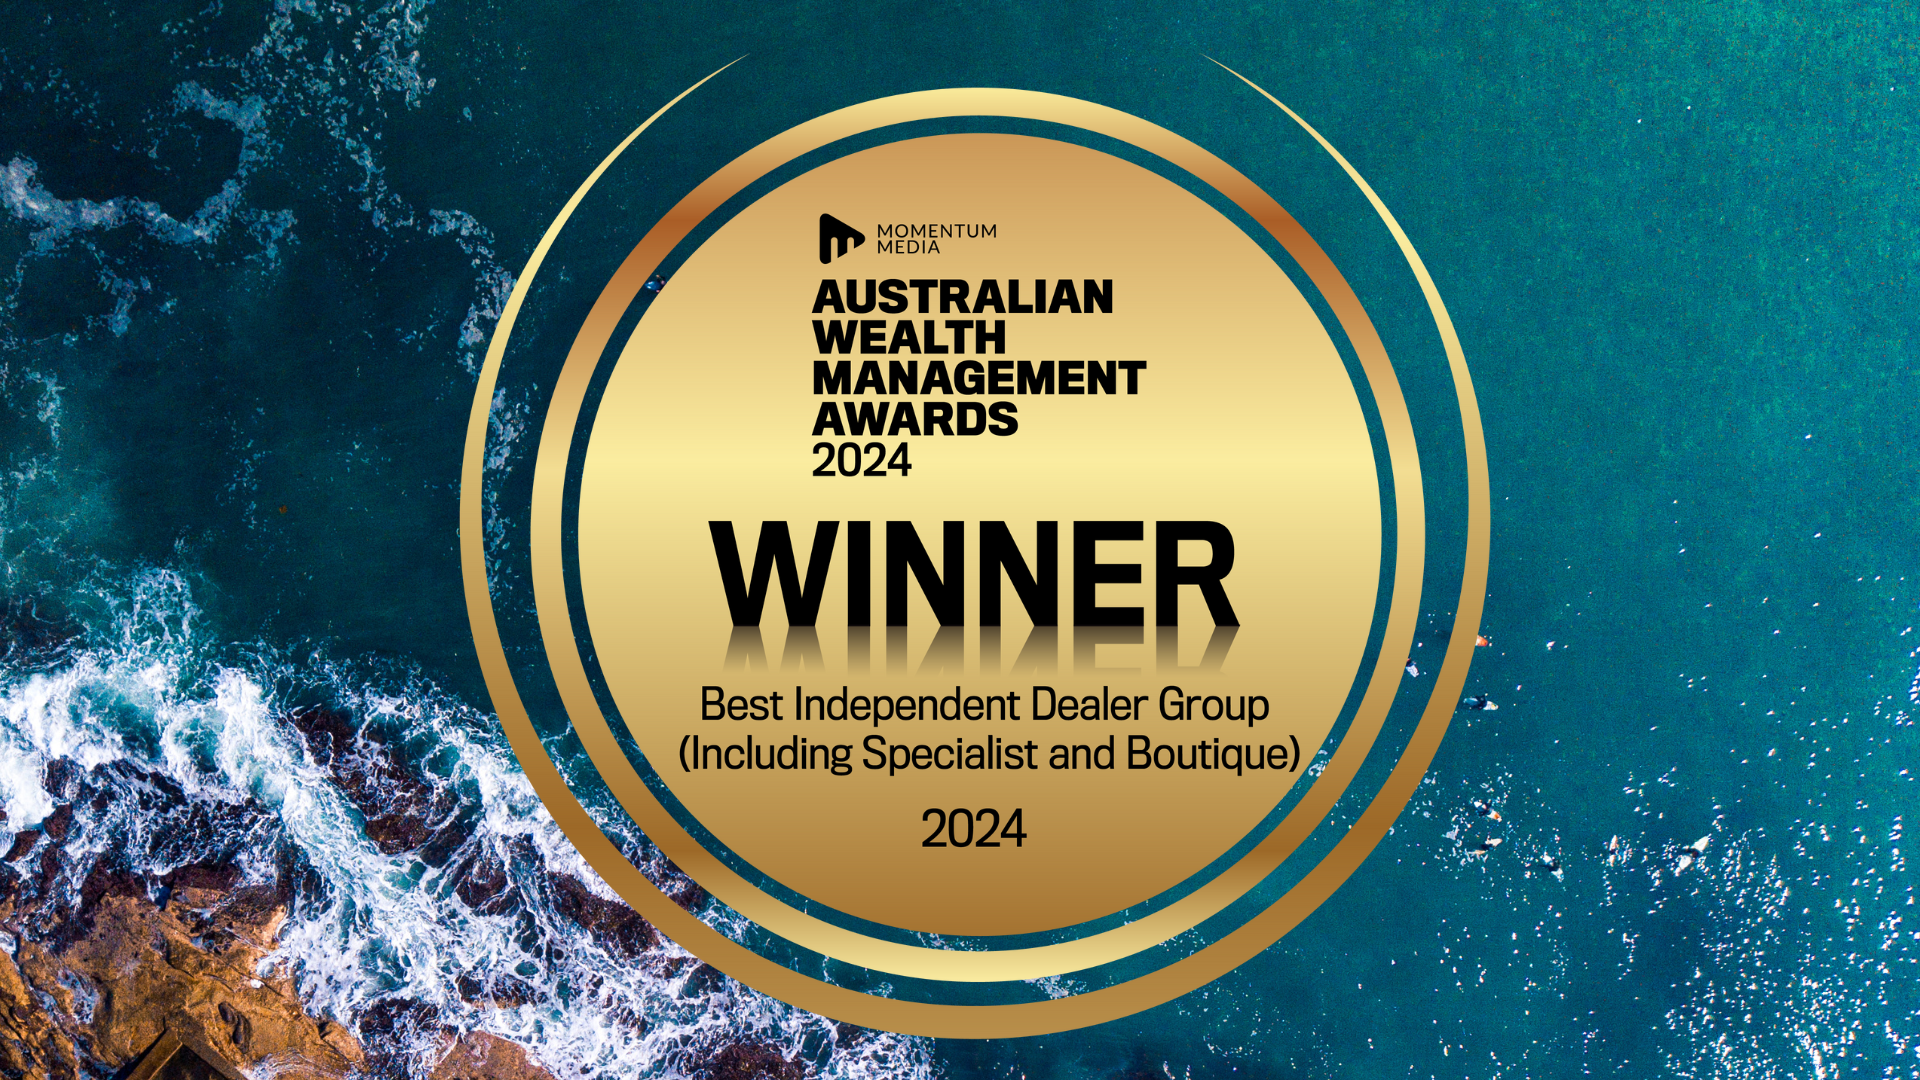 Lifespan Financial Planning winners of the Australian Wealth Management Awards Best Independent Dealer Group 2024